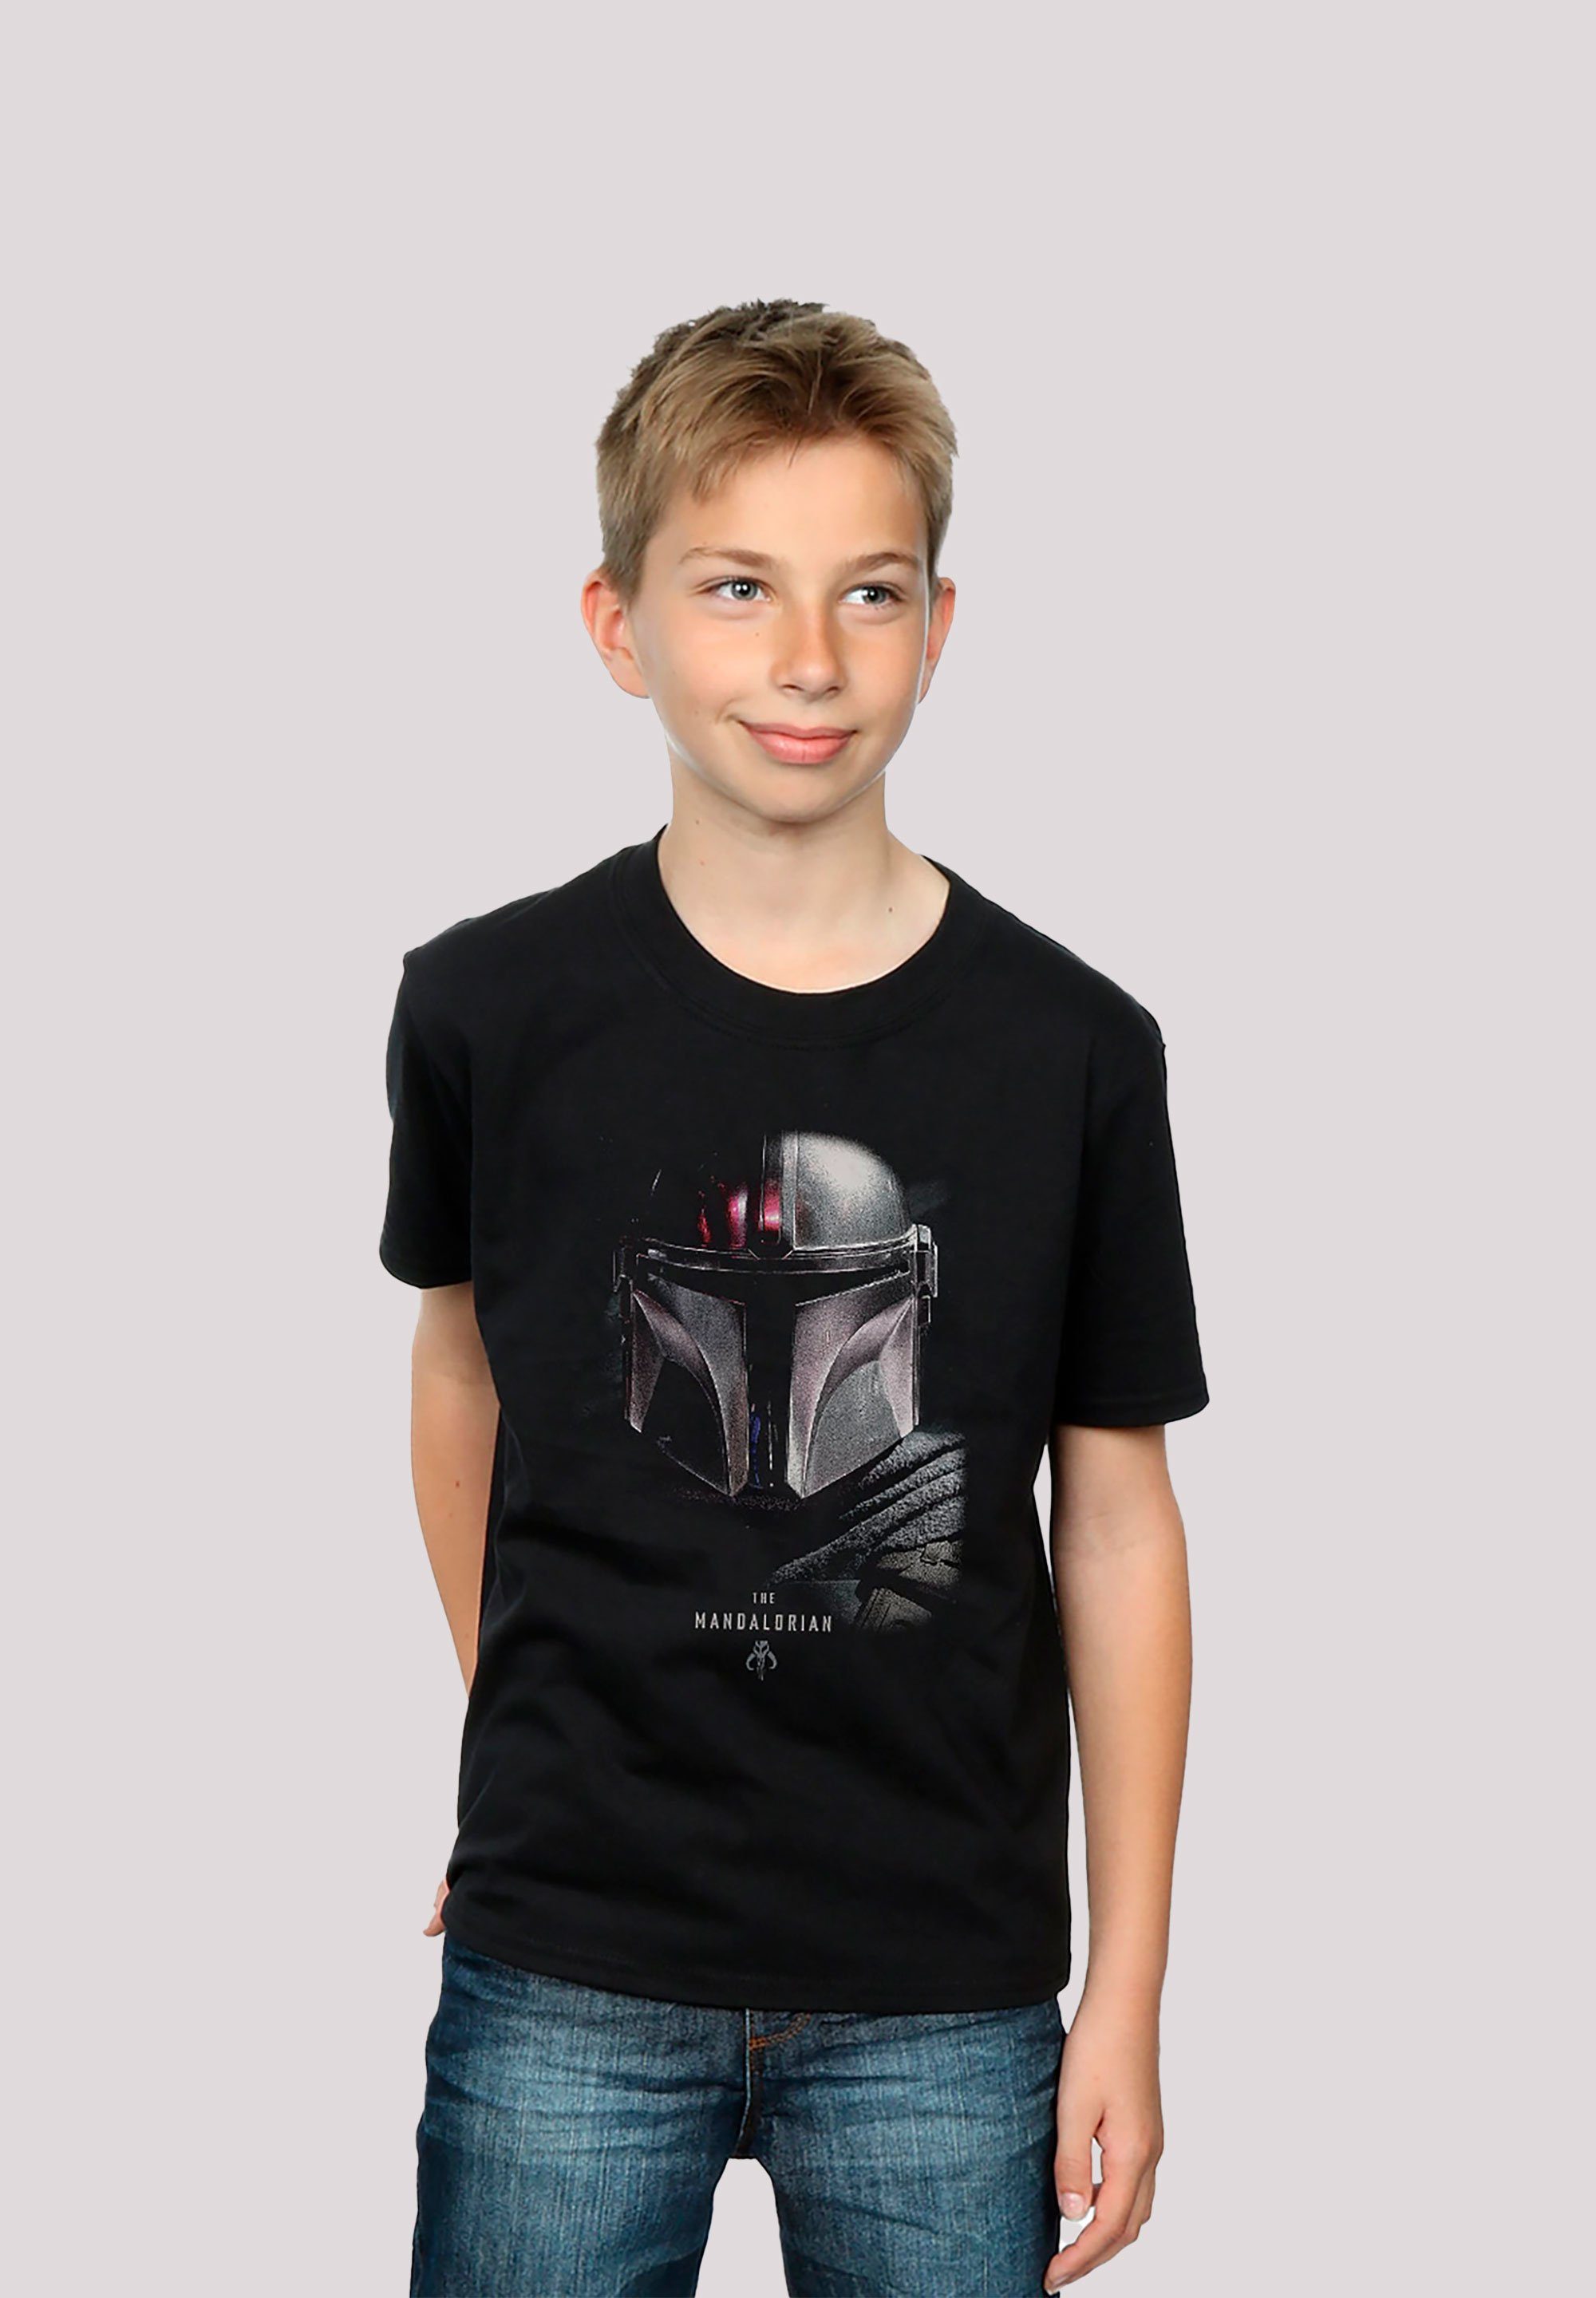 The Star Print Wars F4NT4STIC Poster Mandalorian T-Shirt